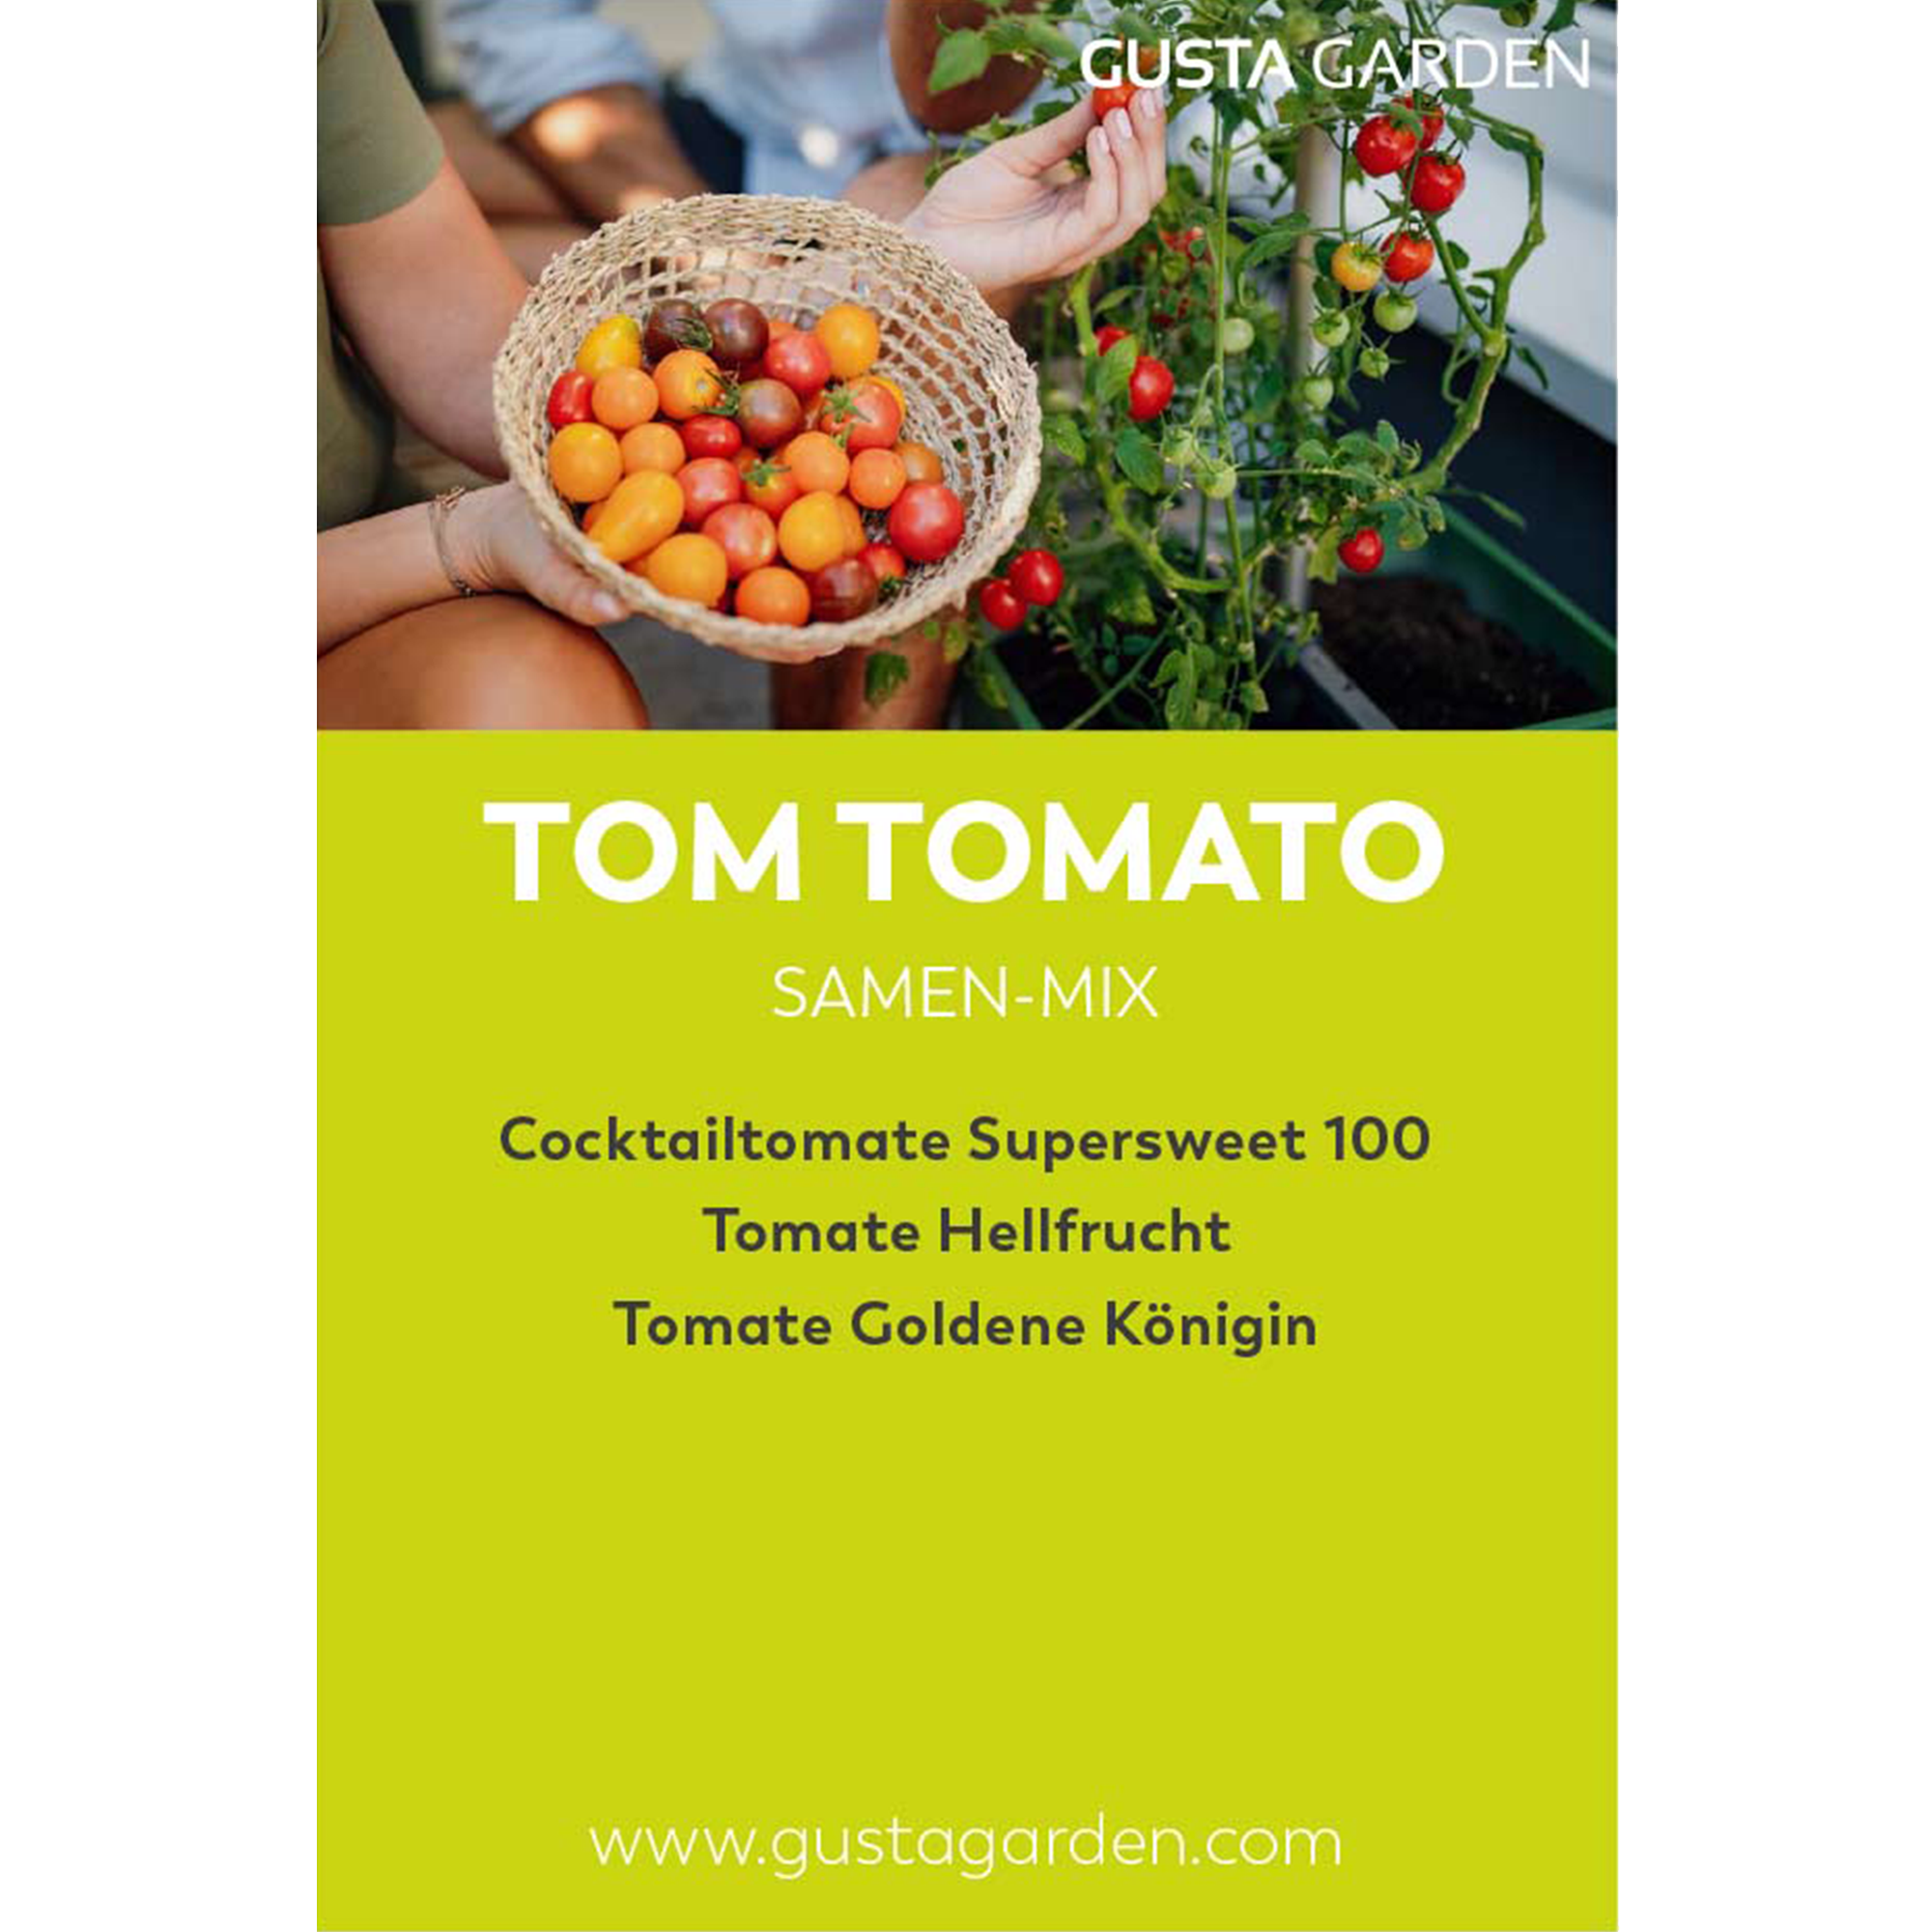 TOM TOMATO seed mix